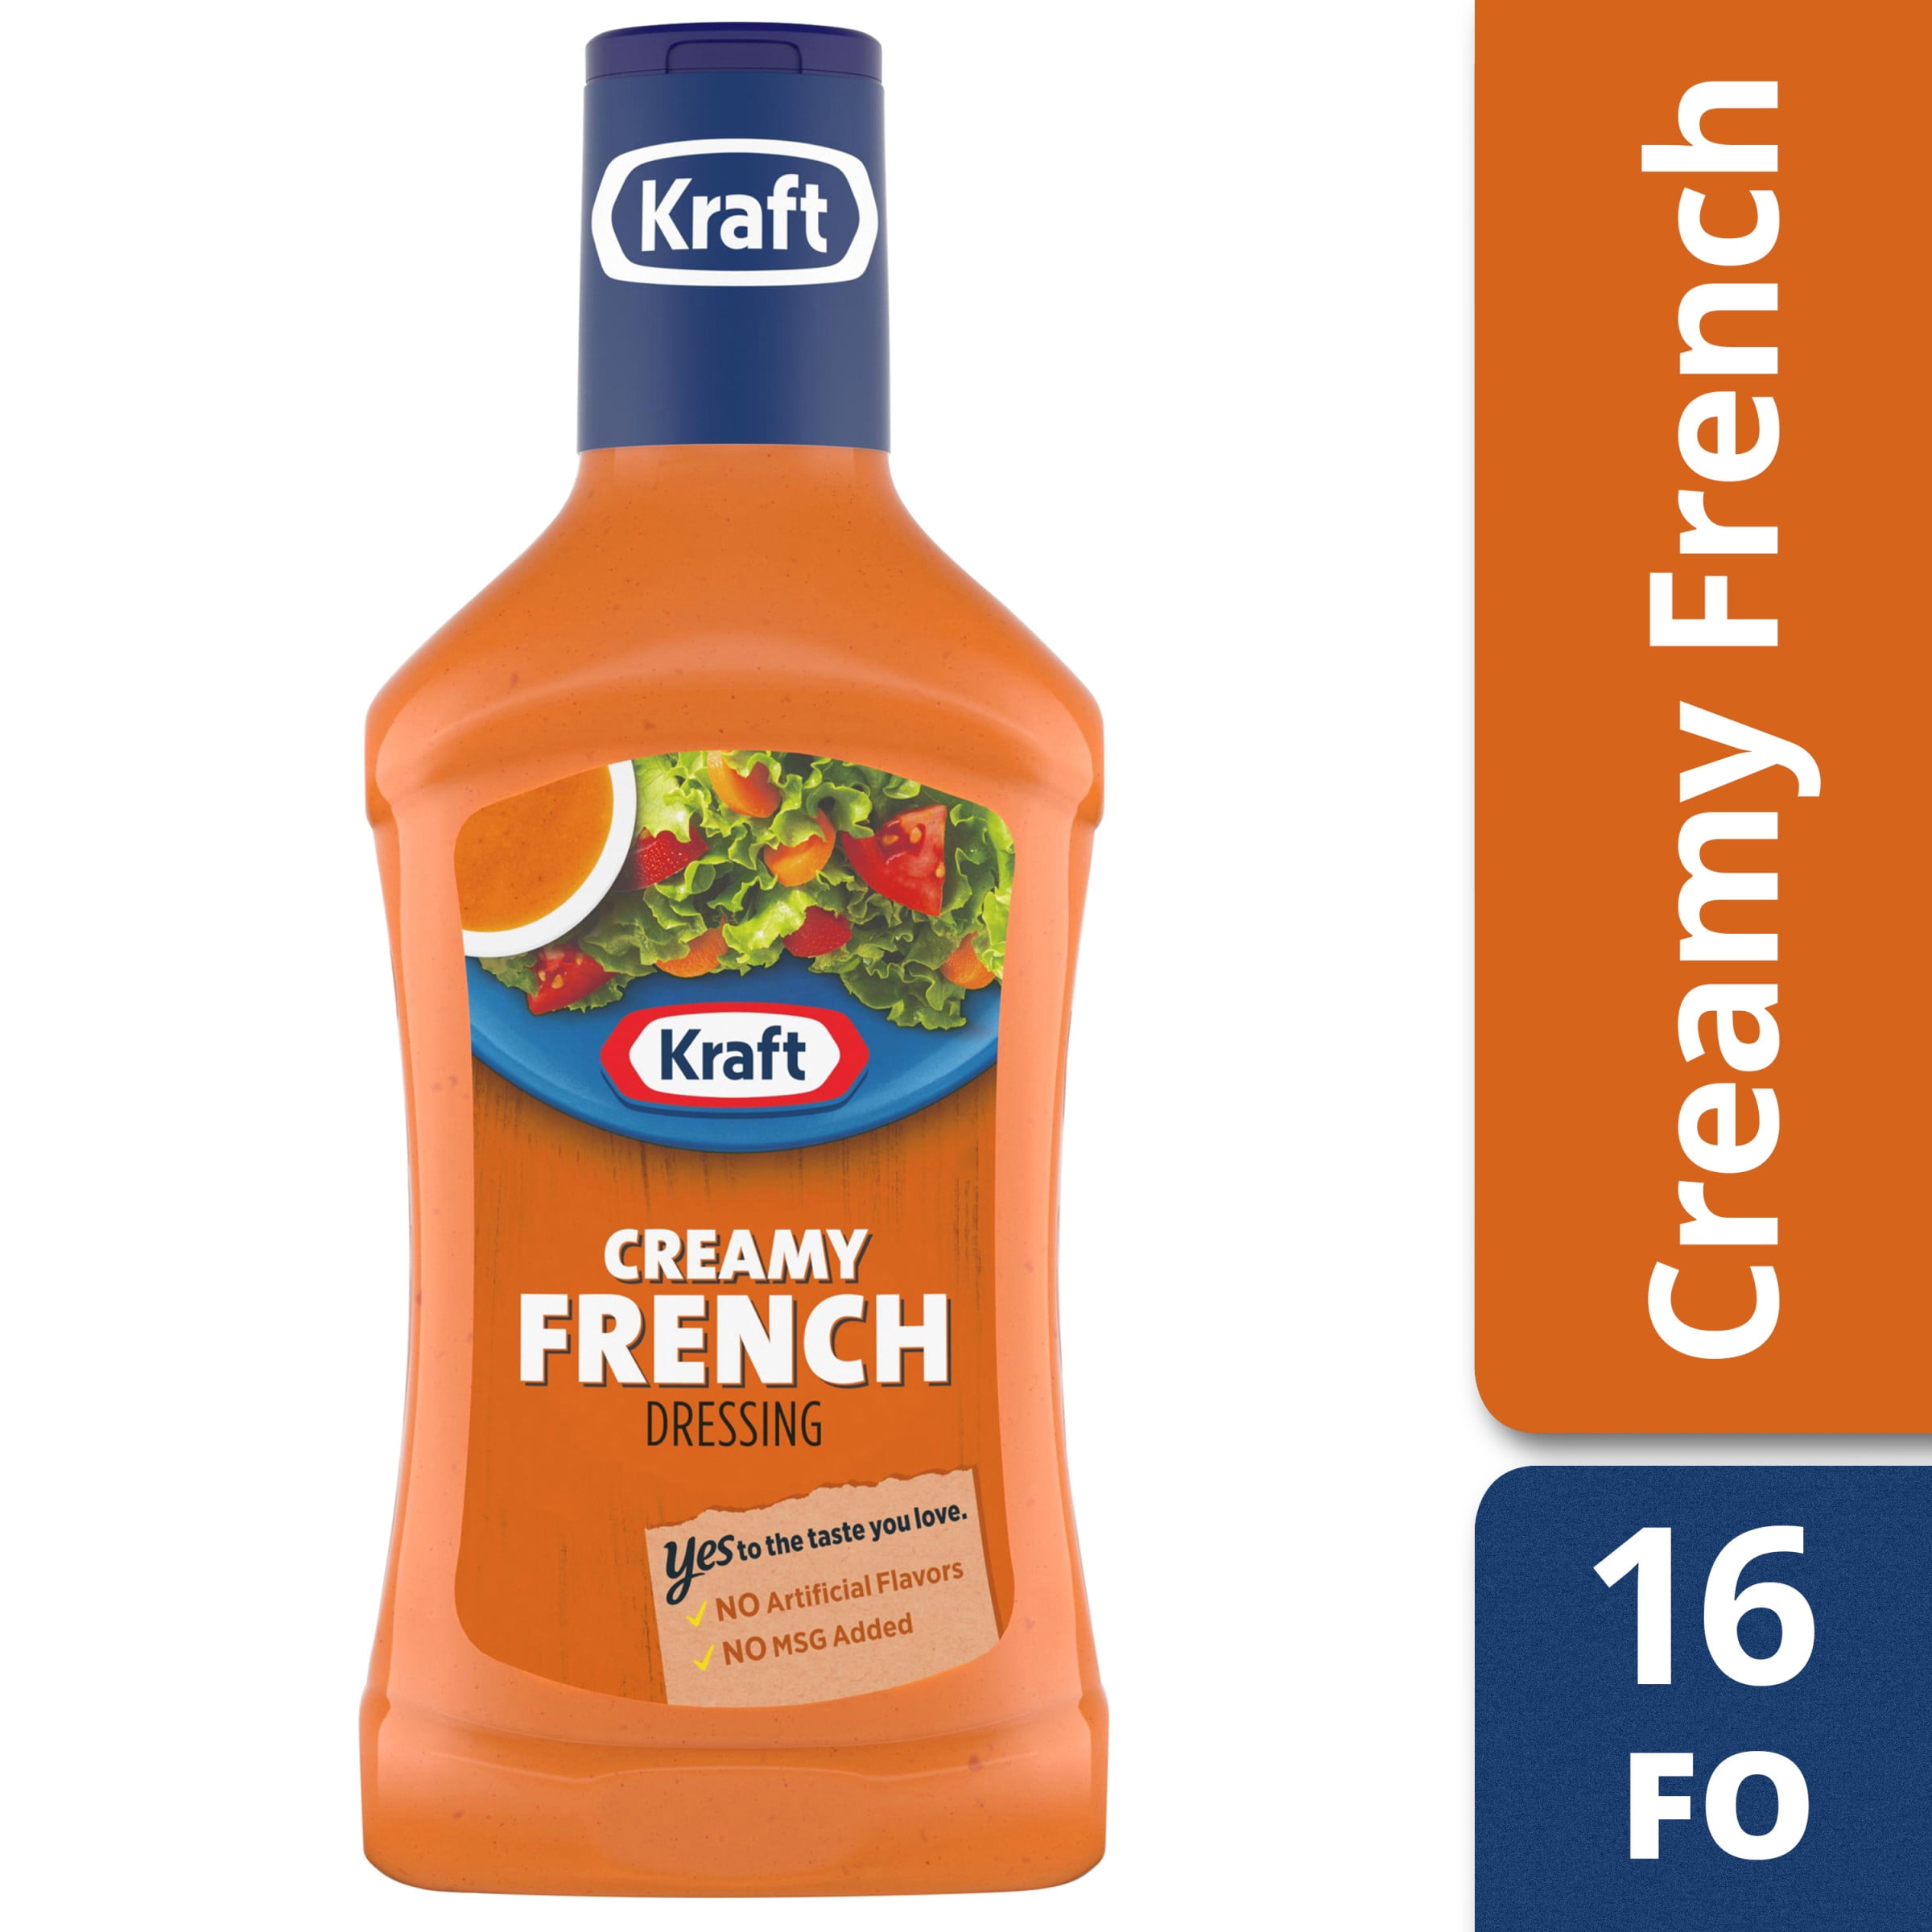 Kraft Creamy French Dressing 16 fl oz Bottle - Walmart.com - Walmart.com